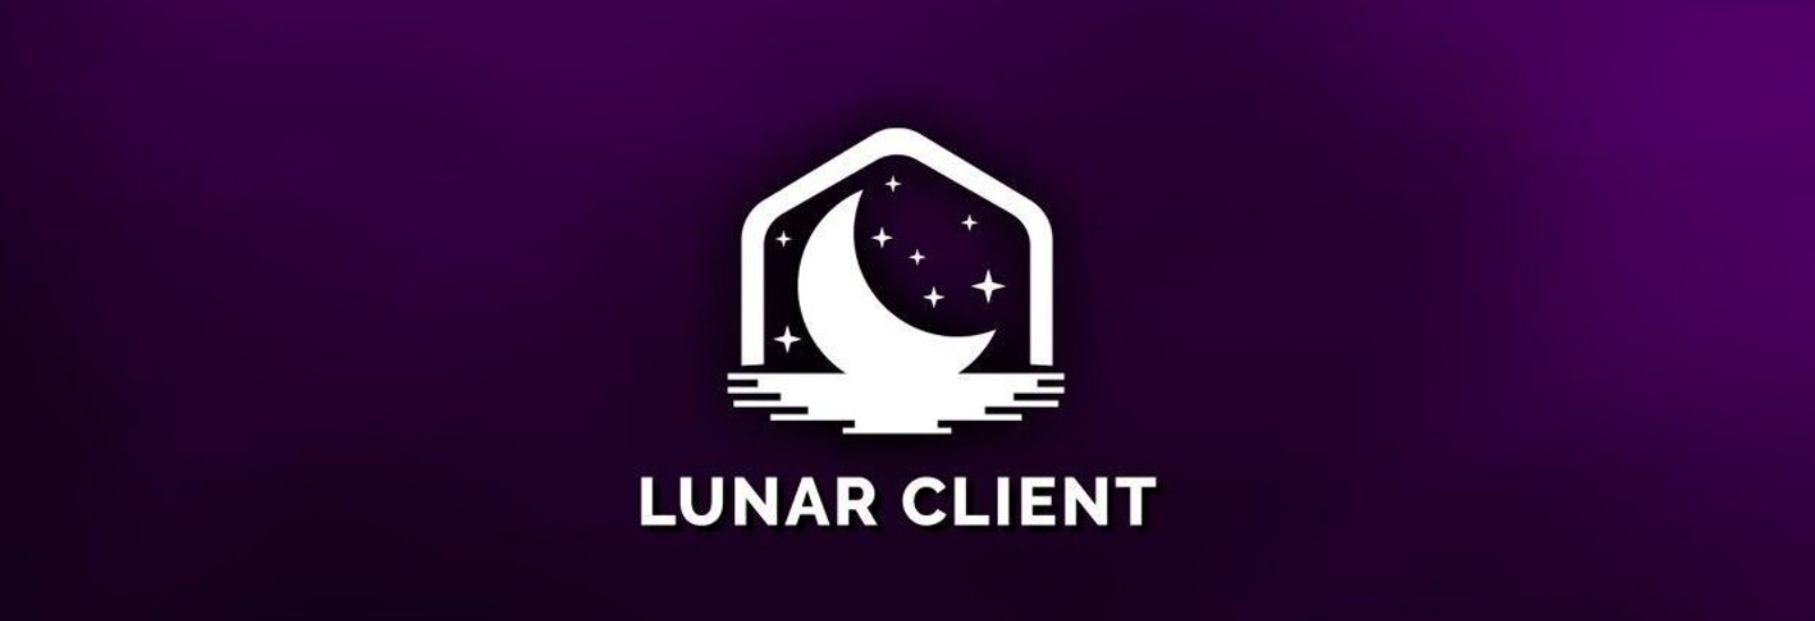 Lunar бесплатный. Лунар клиент. Лунар значок. Иконка Лунар клиента. Картинки Lunar client.